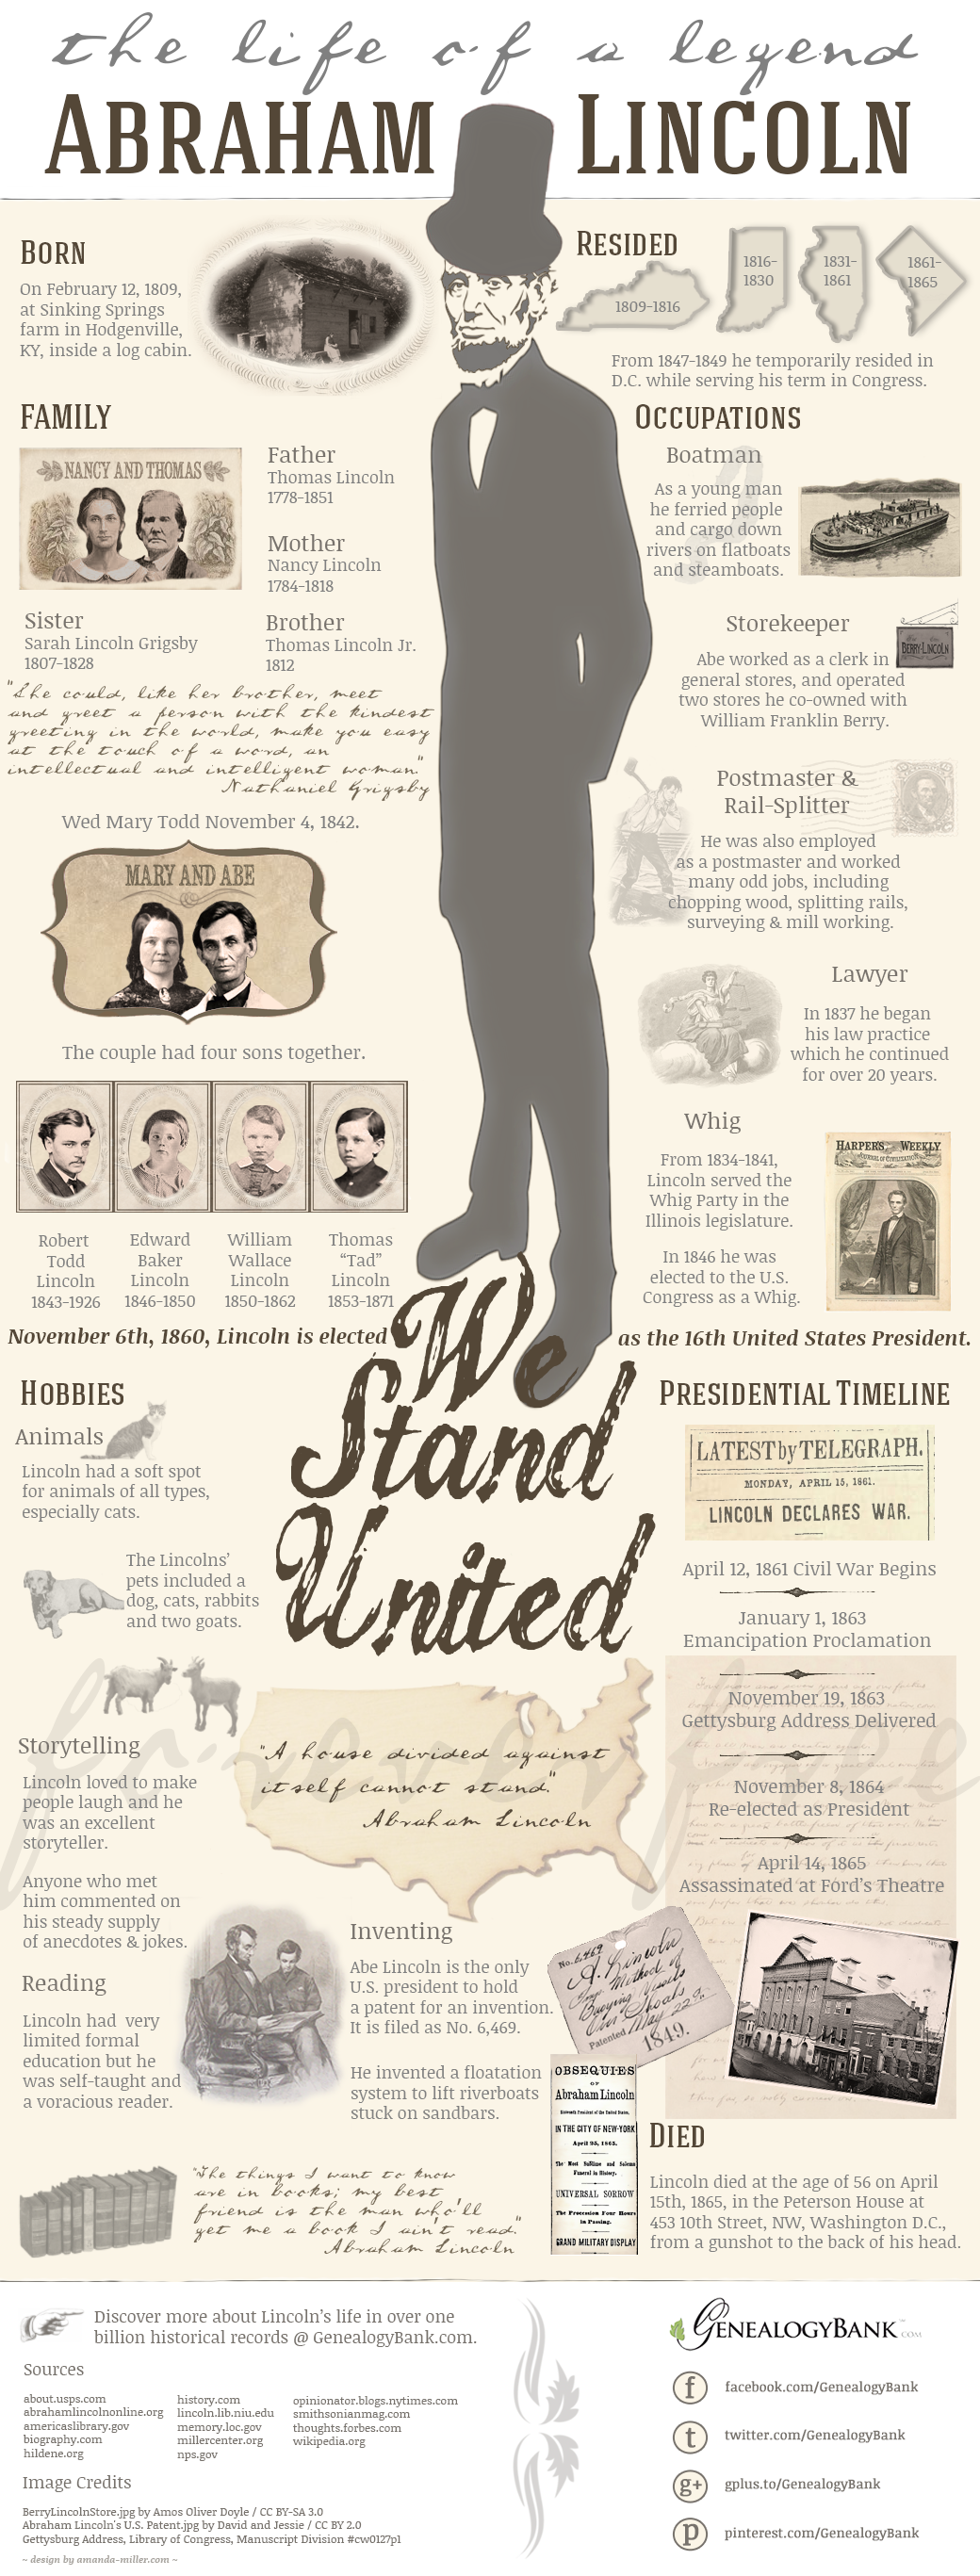 Abraham Lincoln's Family & Life History